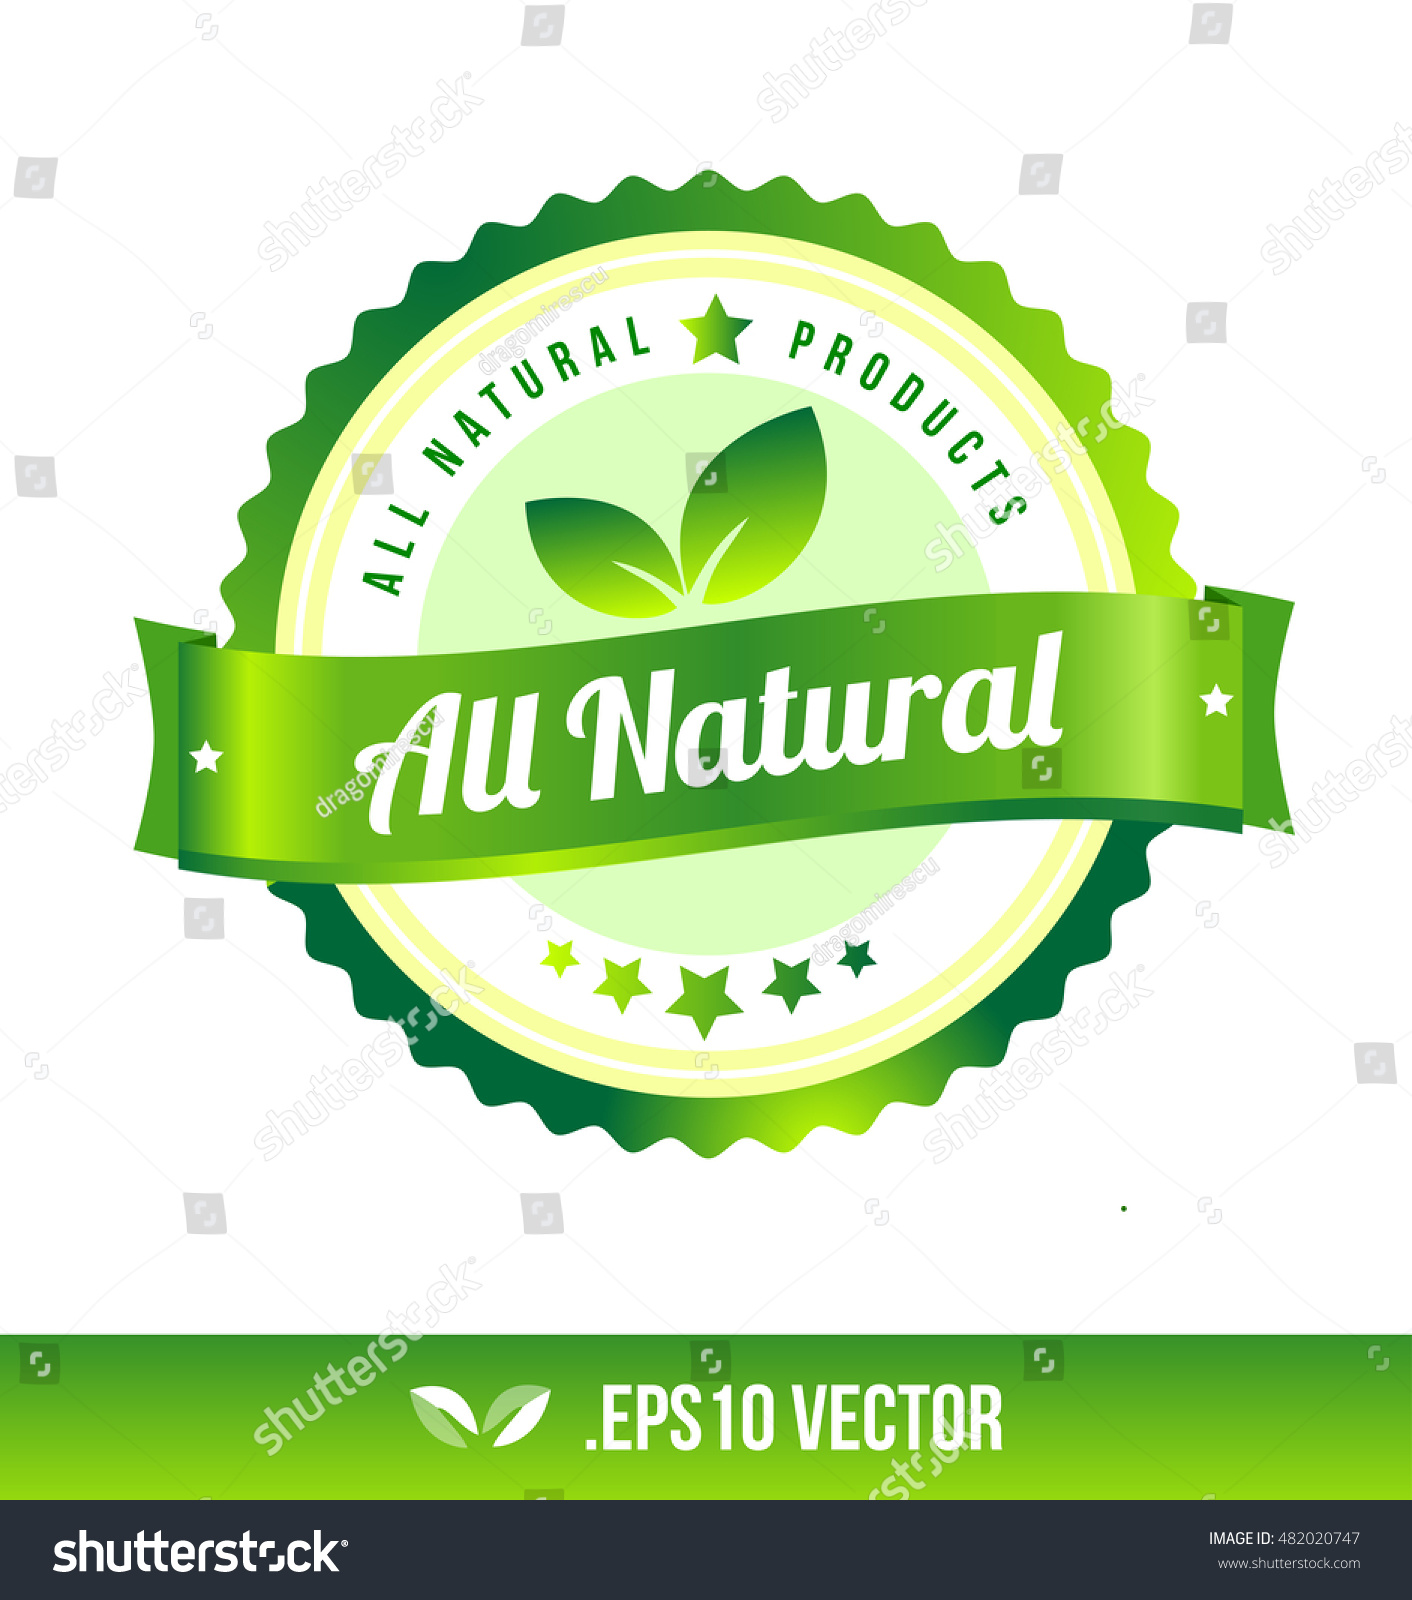 All natural badge label seal stamp logo text design green leaf template vector eps #482020747